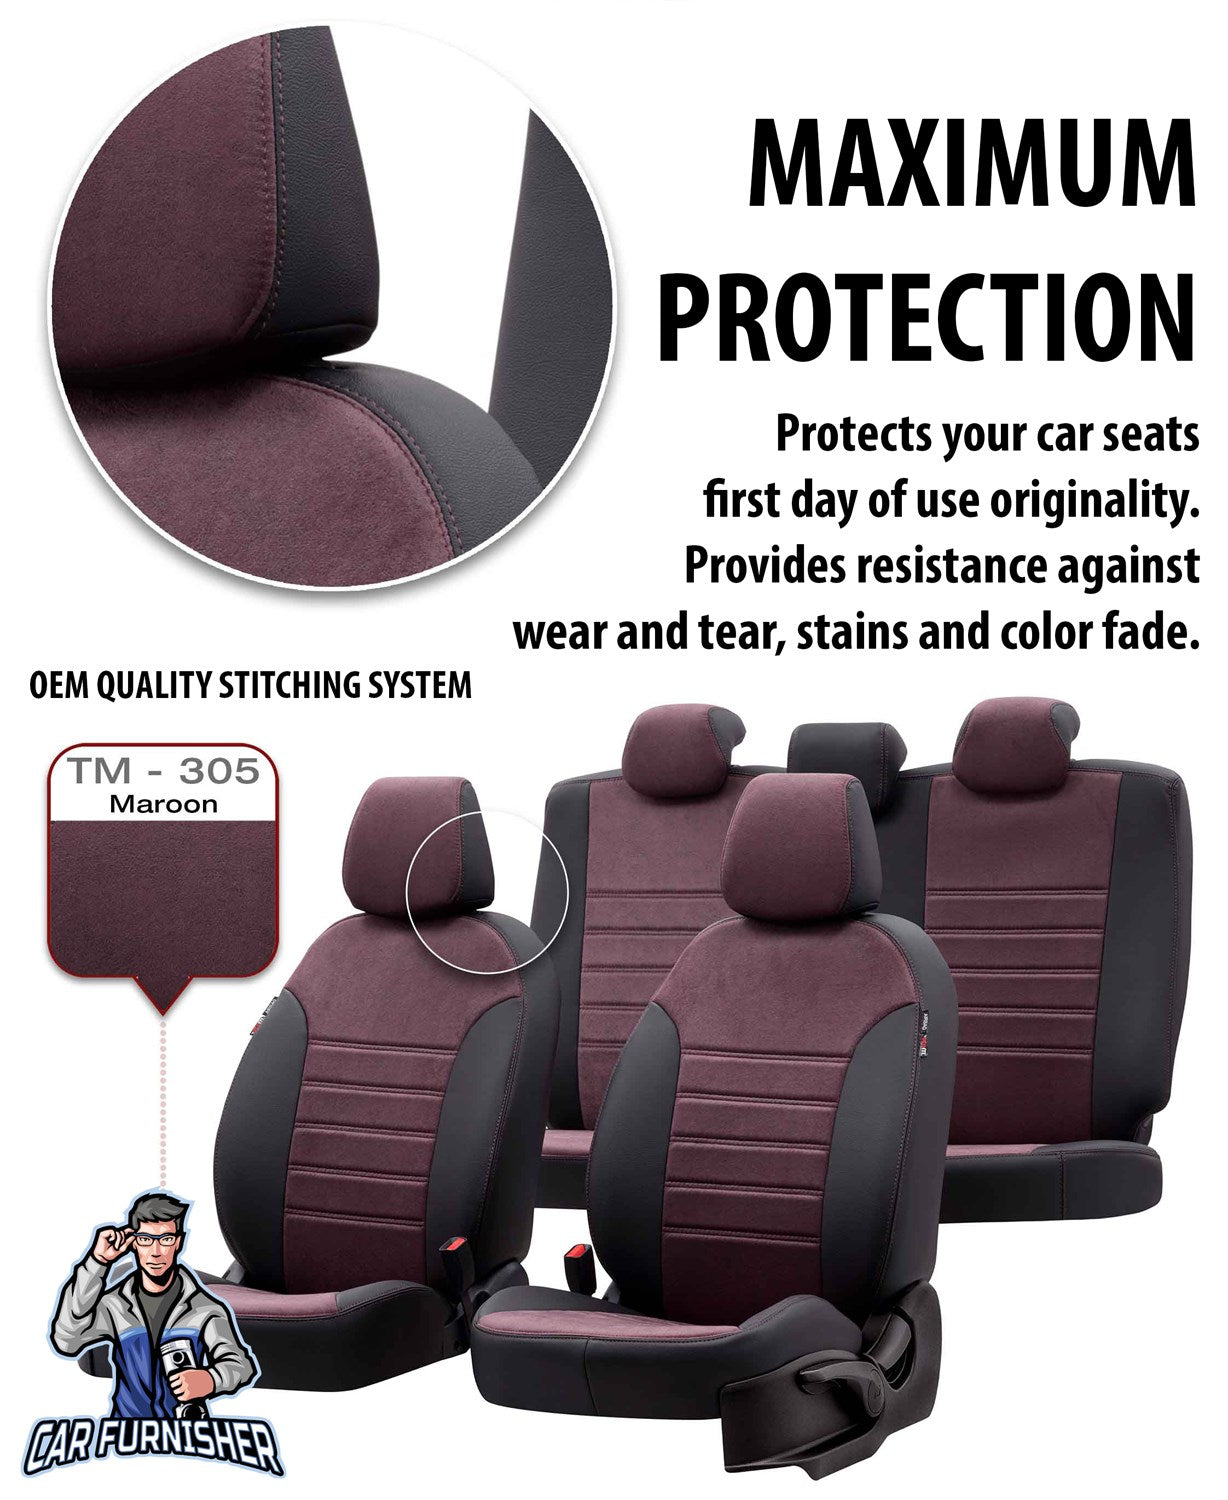 Volkswagen Taigo Seat Cover Milano Suede Design Black Leather & Suede Fabric